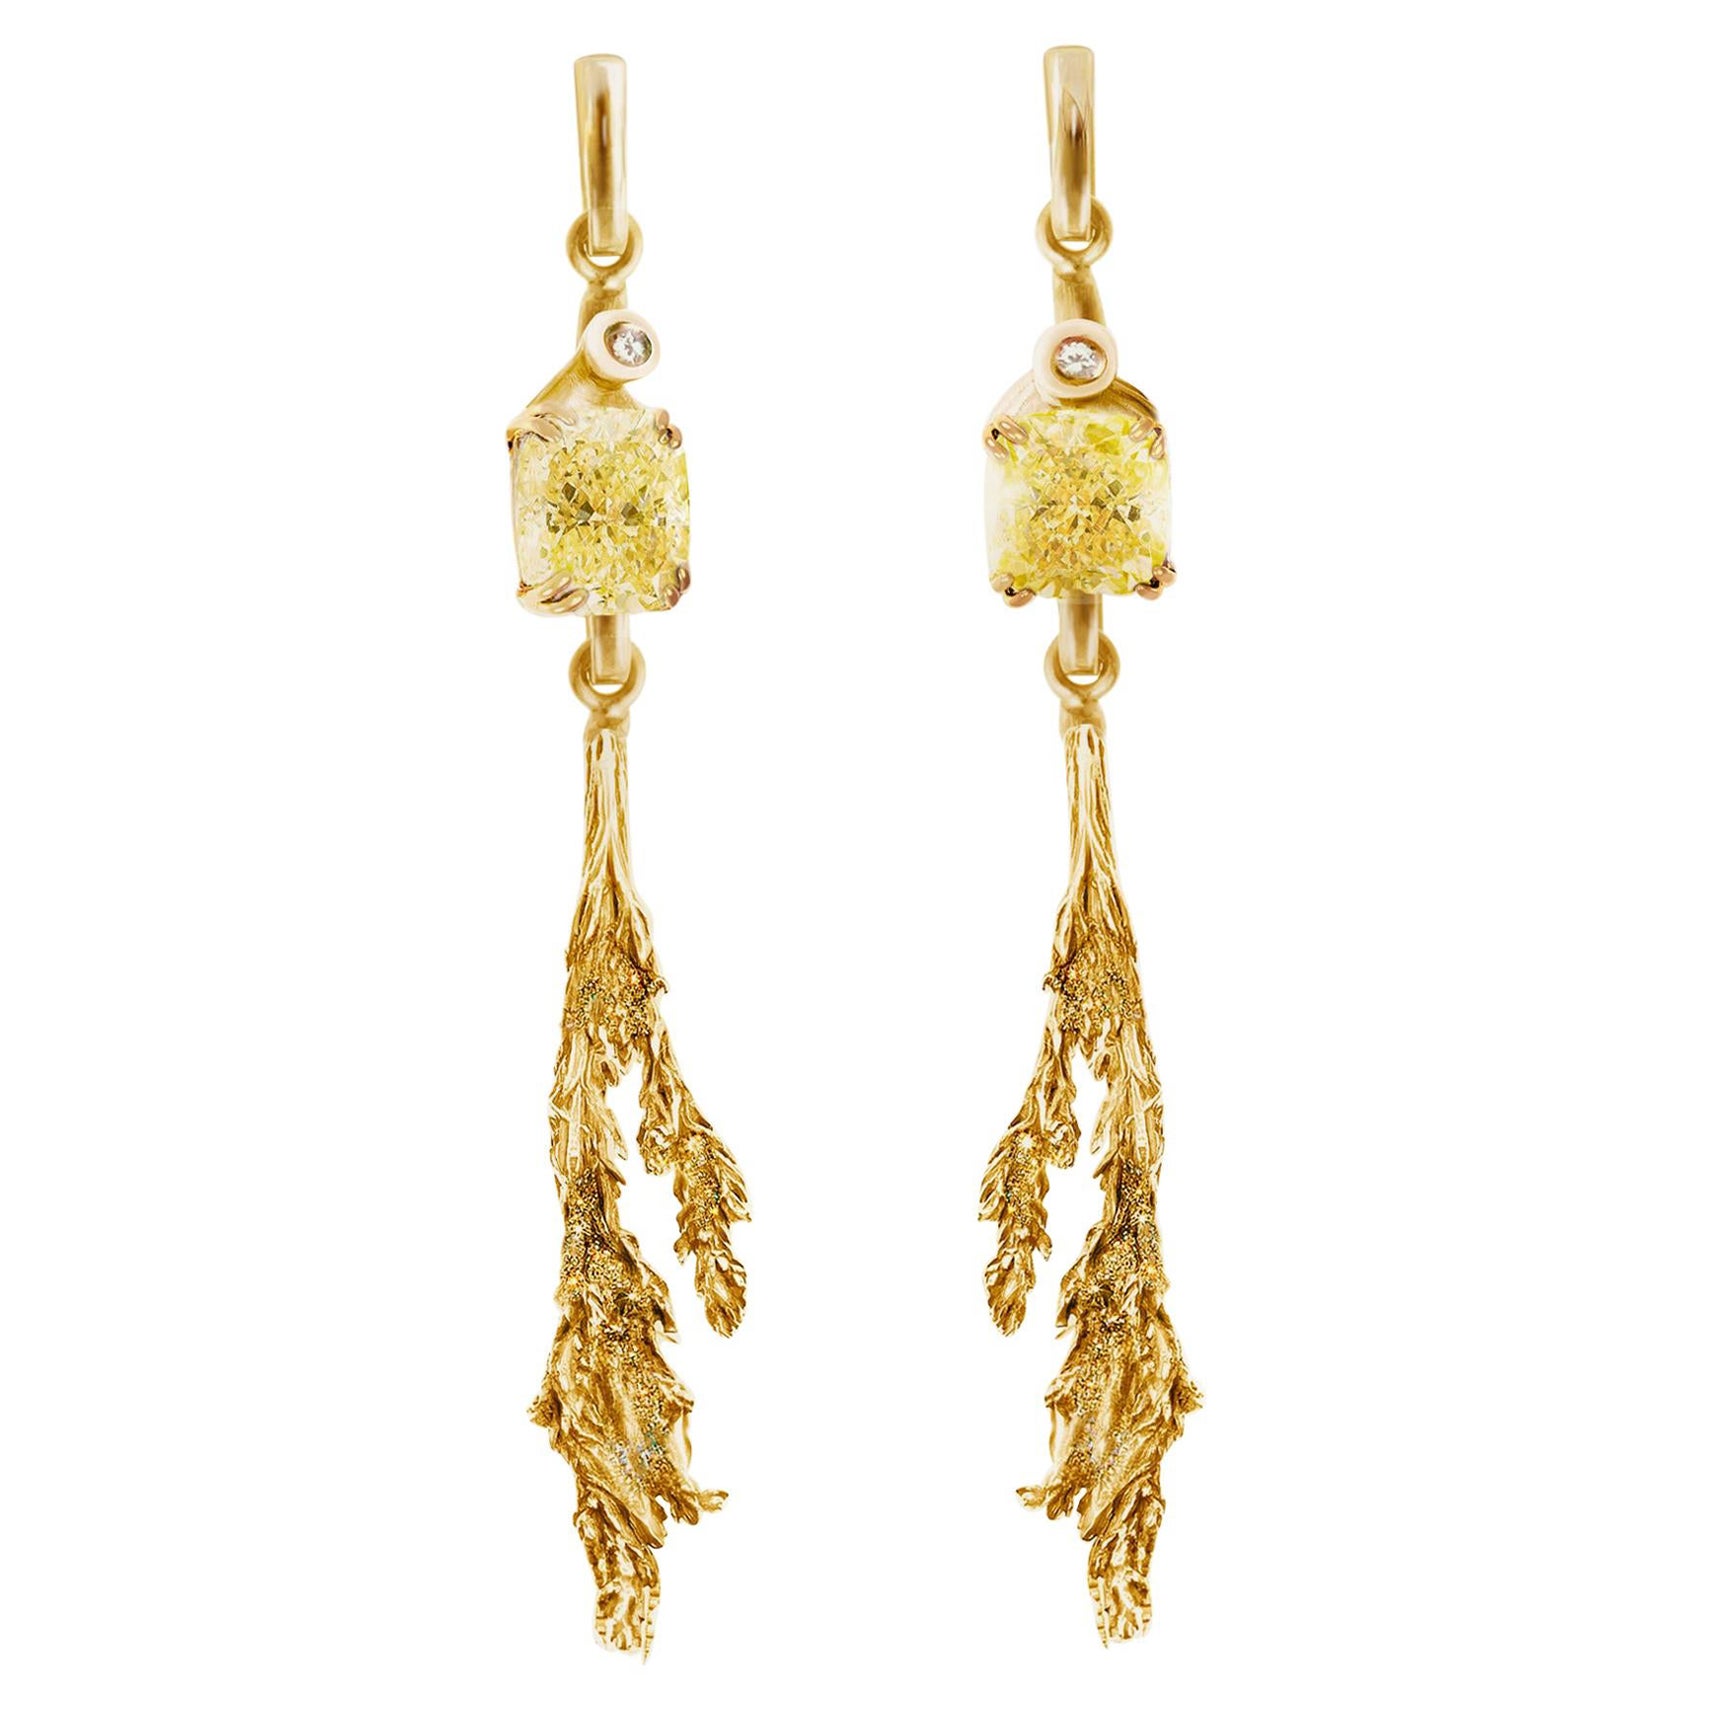 Eighteen Karat Gold Contemporary Earrings with GIA Certified Yellow Diamonds